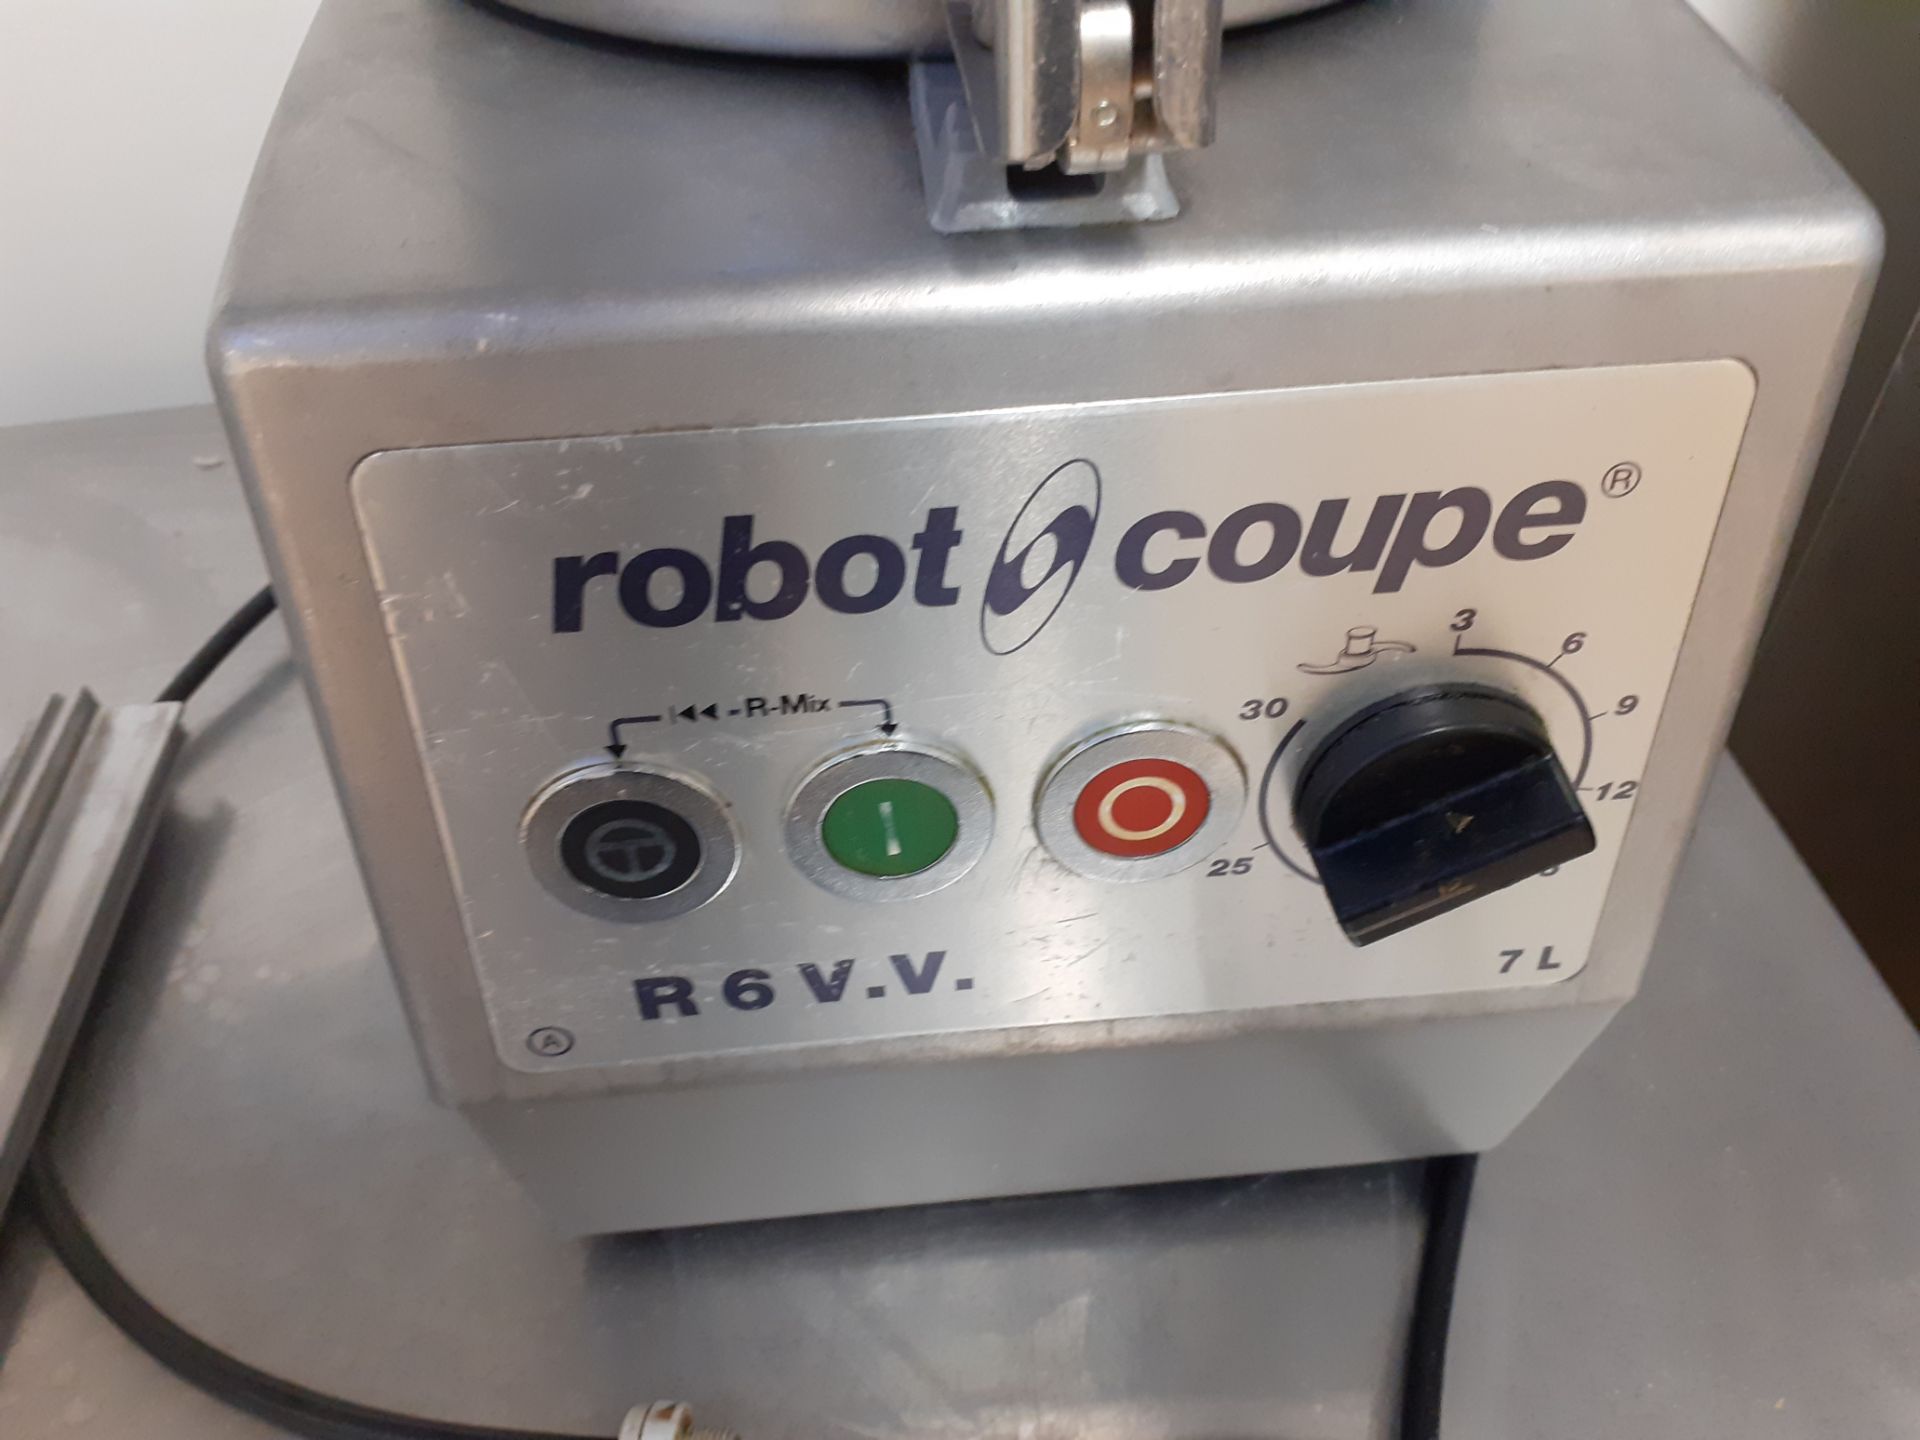 Robot Coupe PG V.V. Cutter Mixer - Image 2 of 2